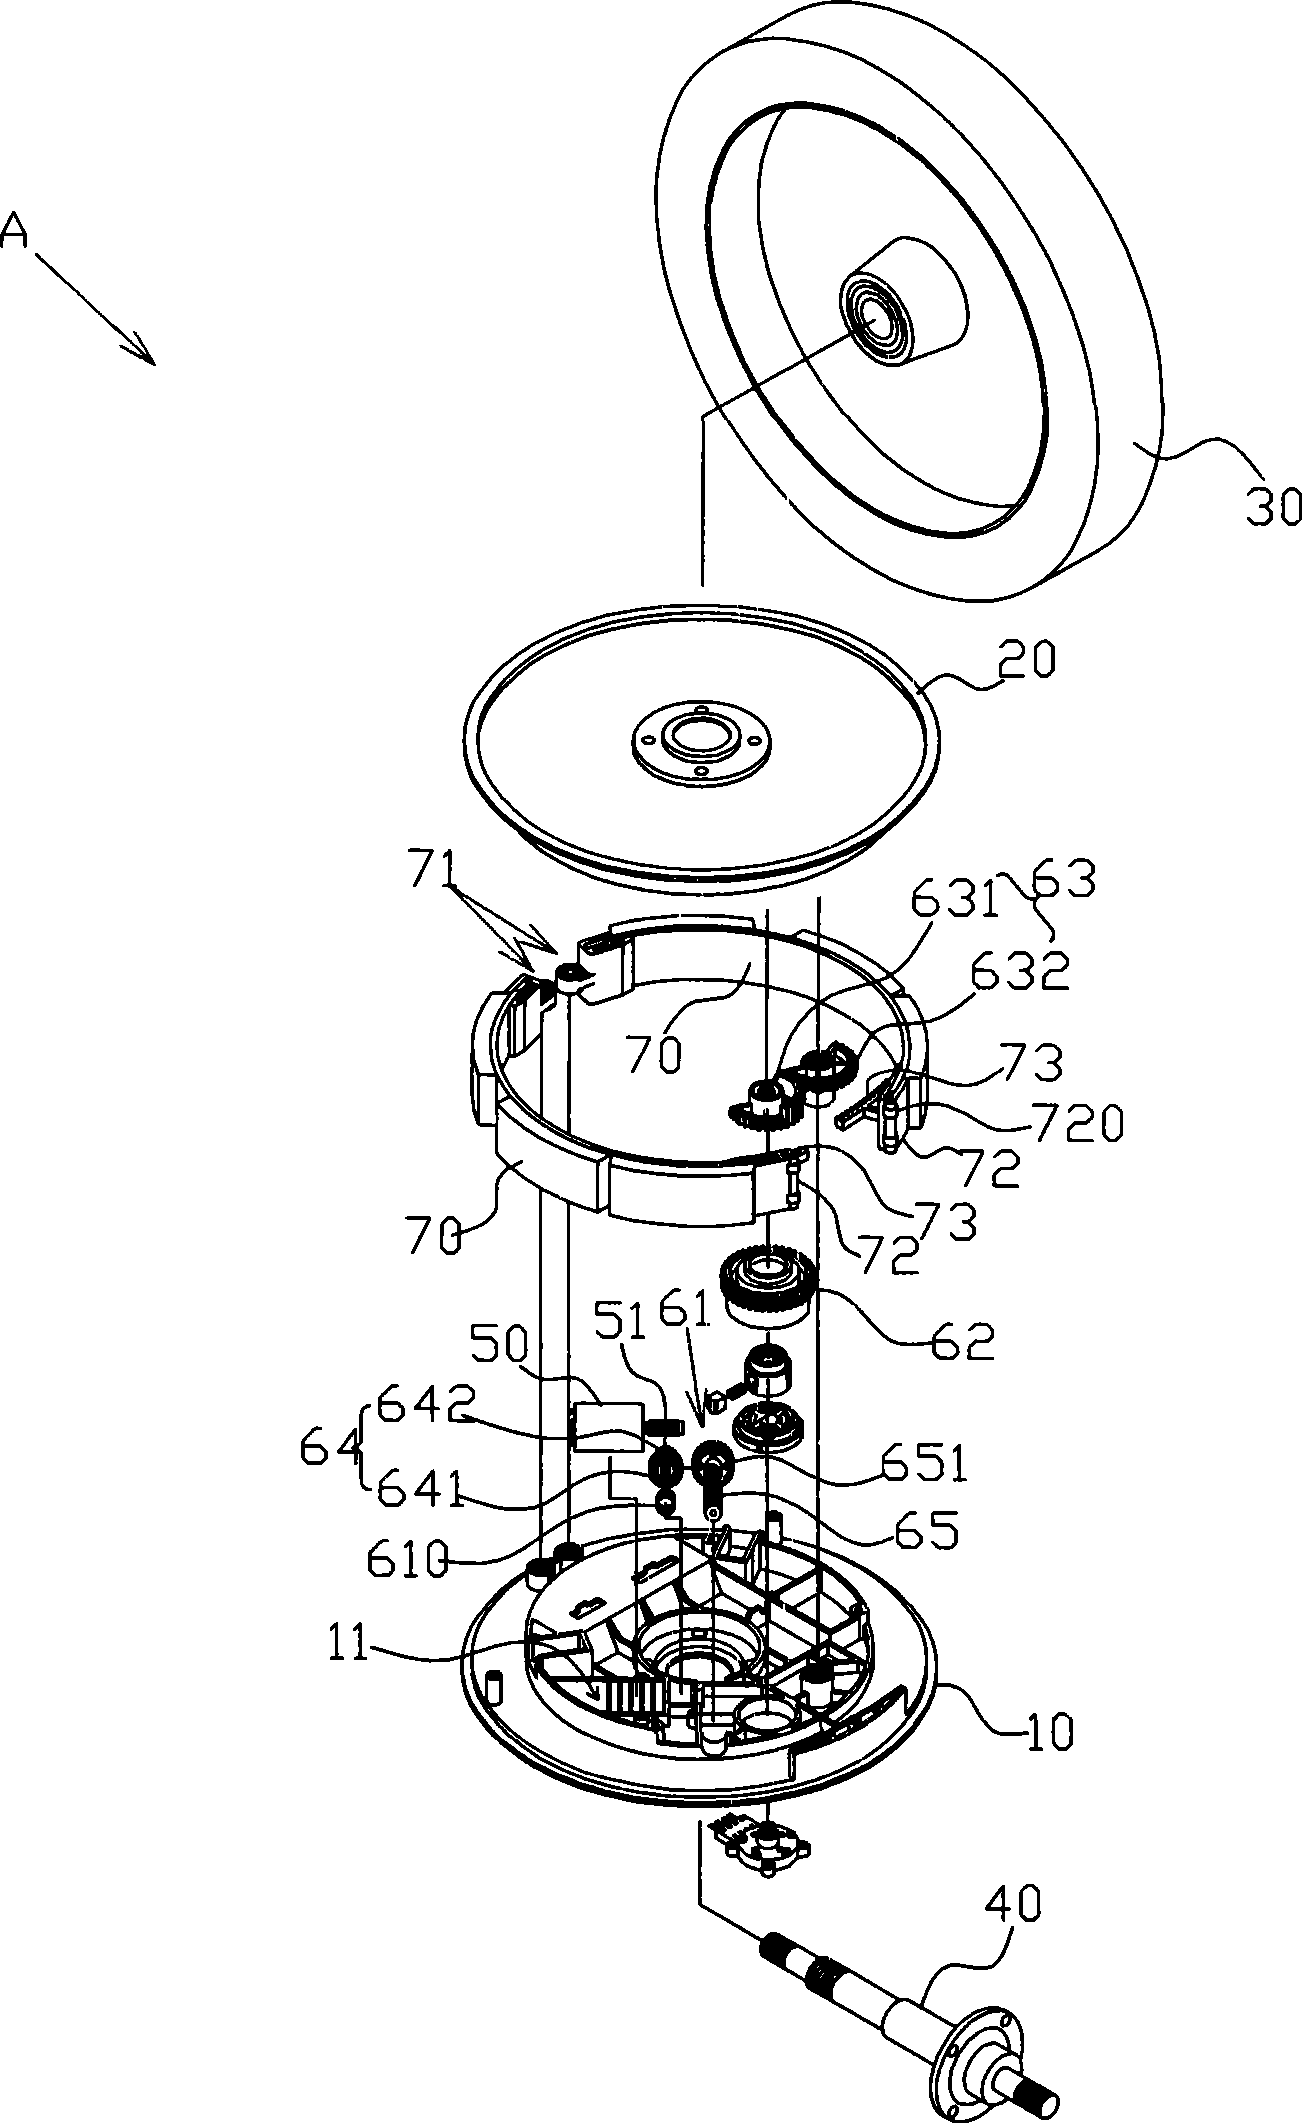 Magnetic-control wheel